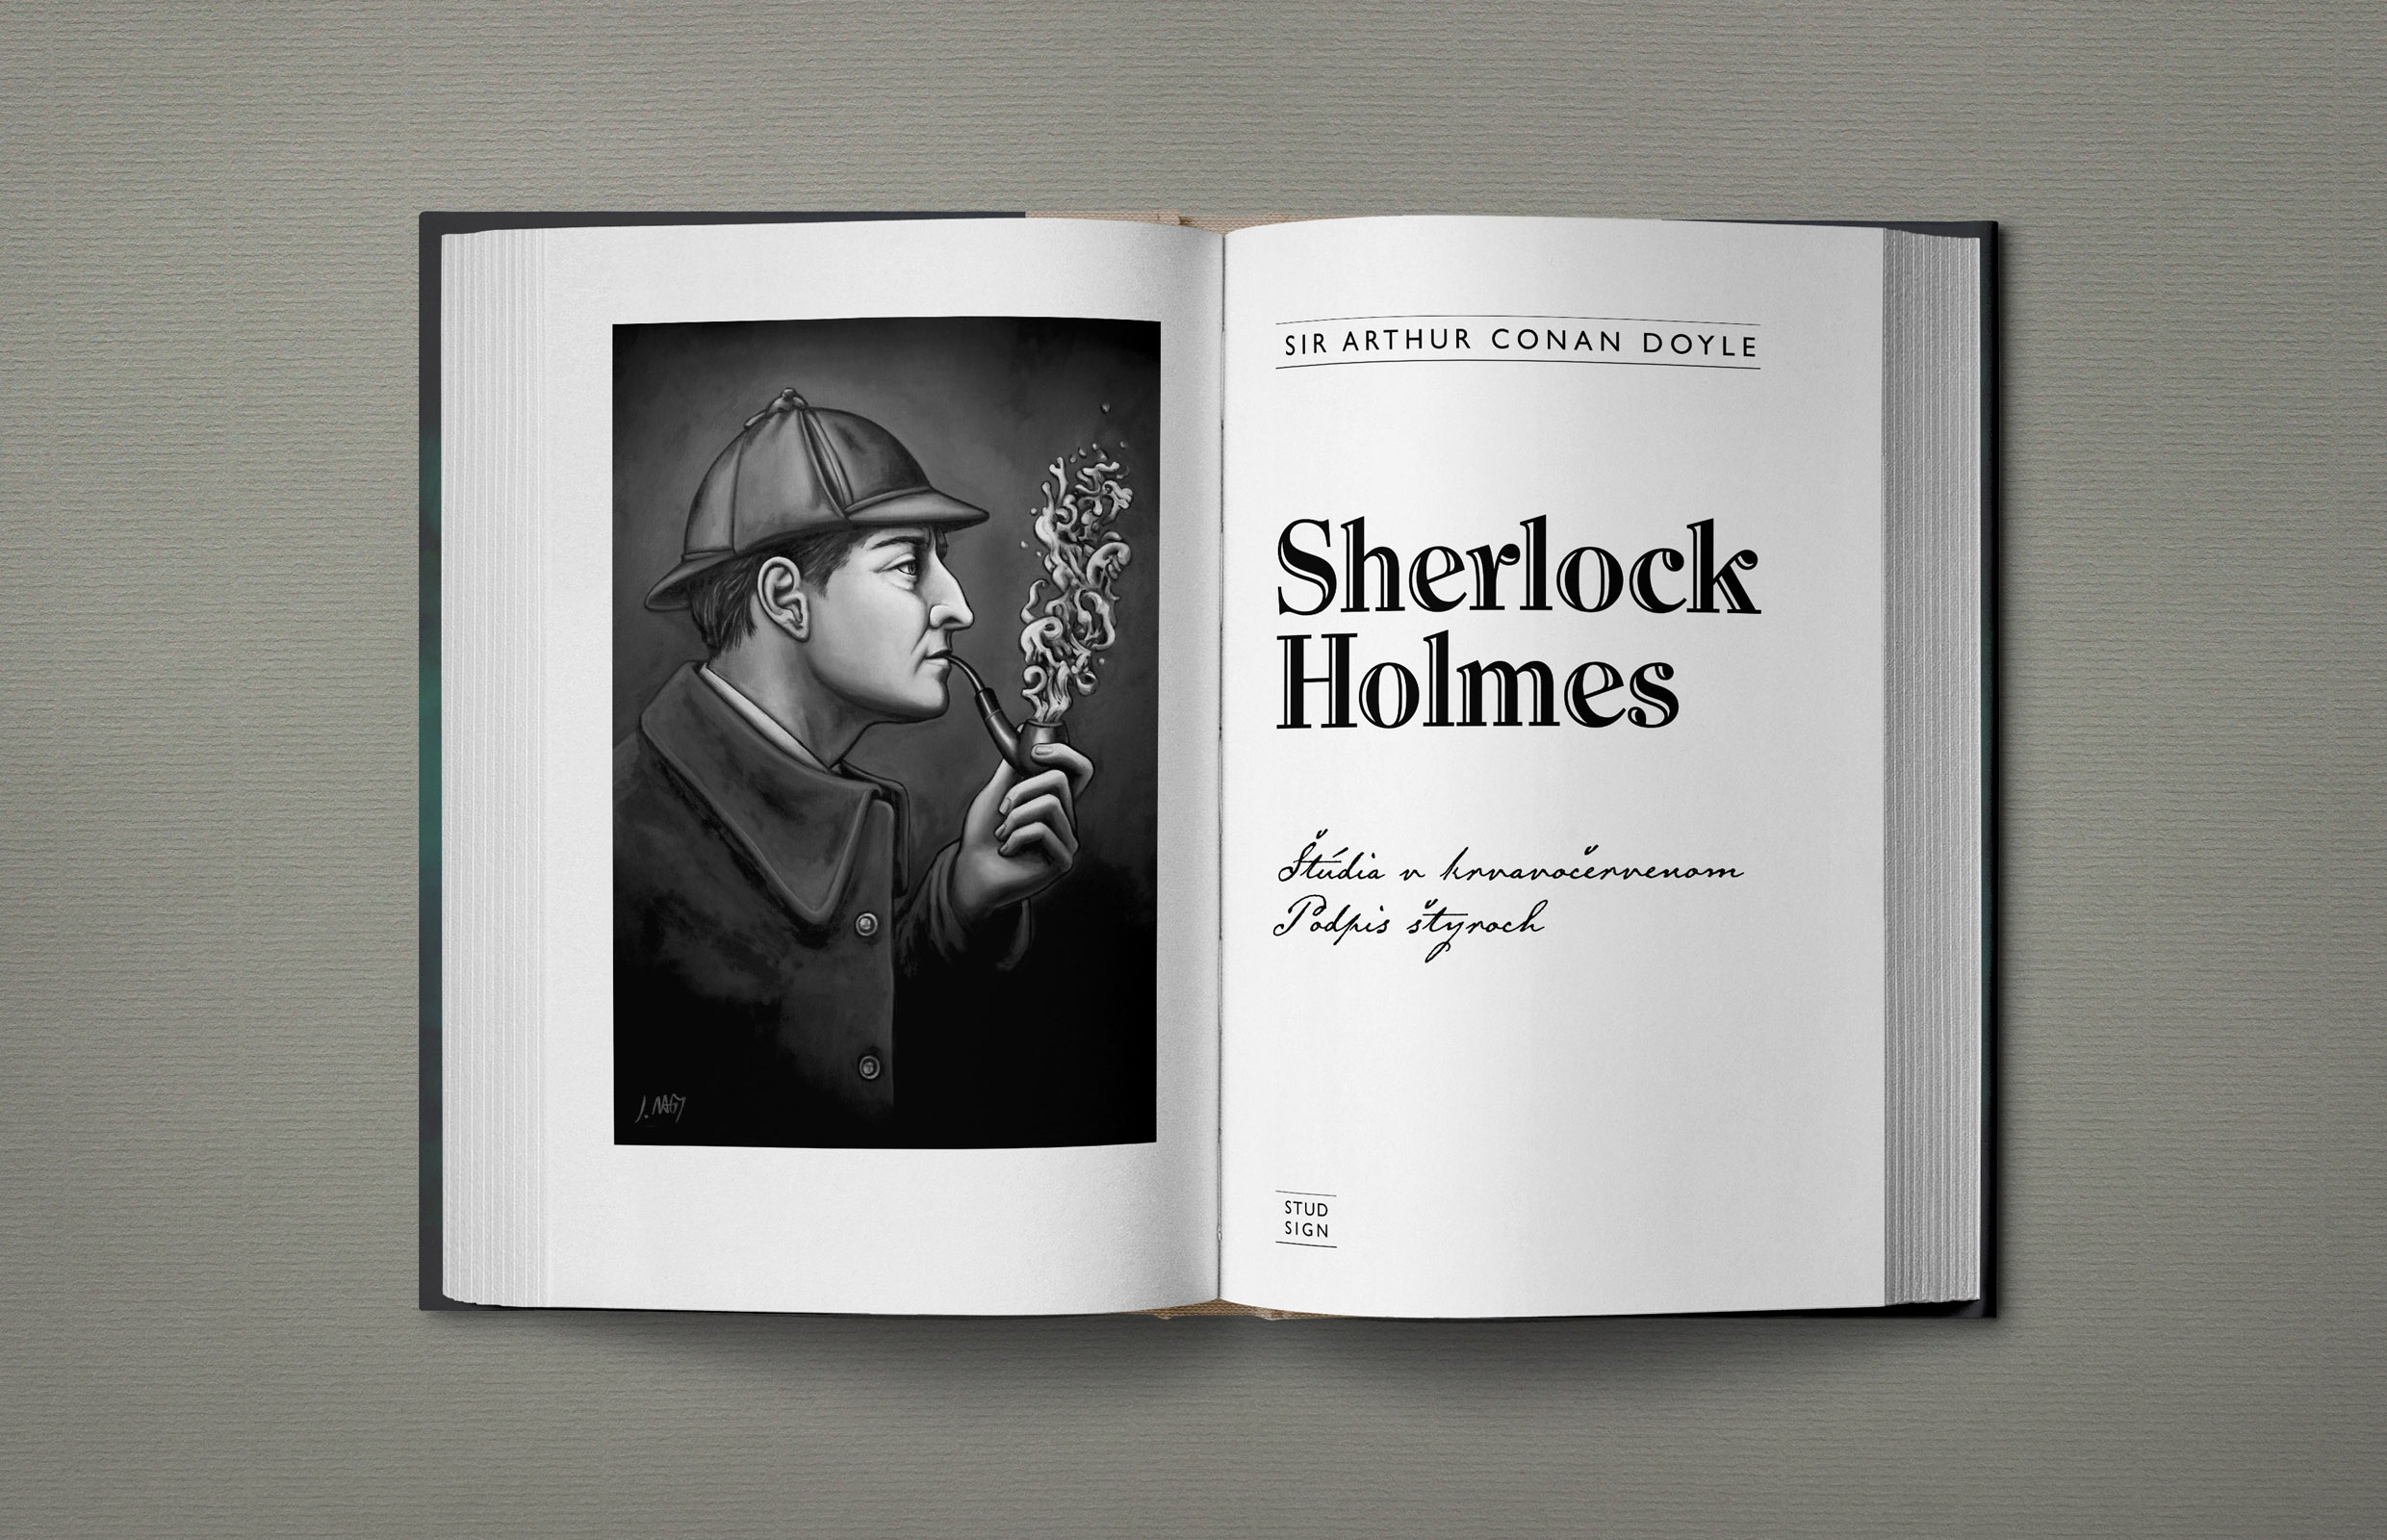 Конан дойл на английском. Иллюстрации Конан Дойл Холмс. Artur Conan doil Sherlock.